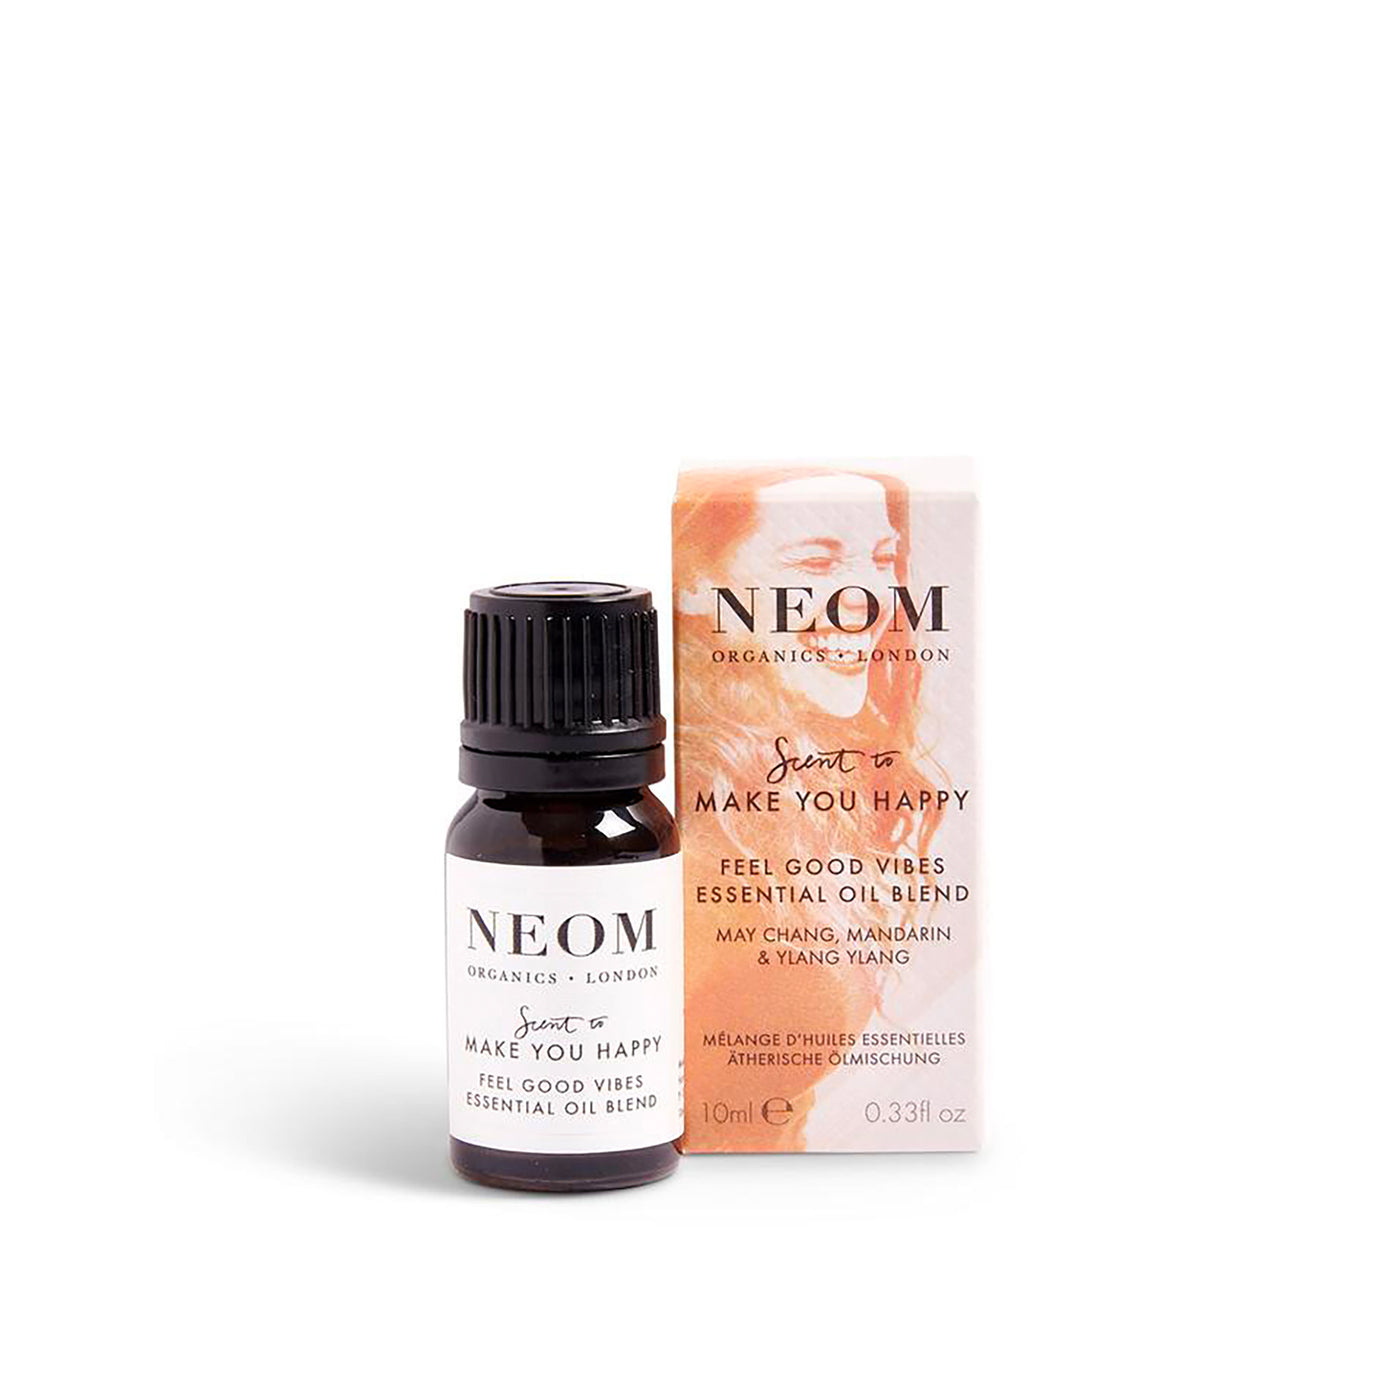 NEOM Organics - Feel Good Vibes Essential Oil Blend